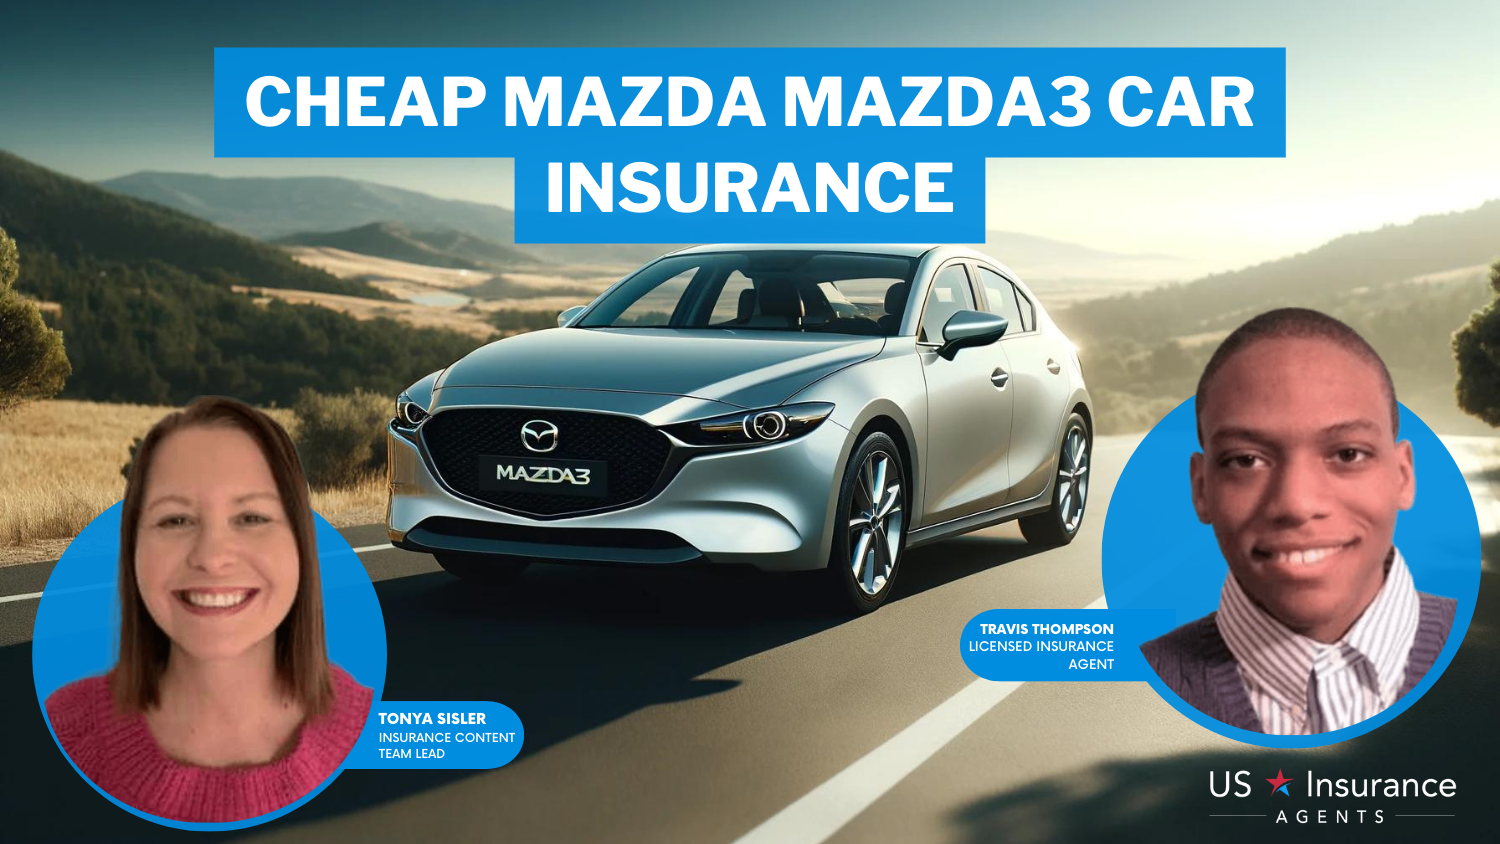 Cheap MAZDA MAZDA3 Car Insurance: State Farm, USAA, and Progressive